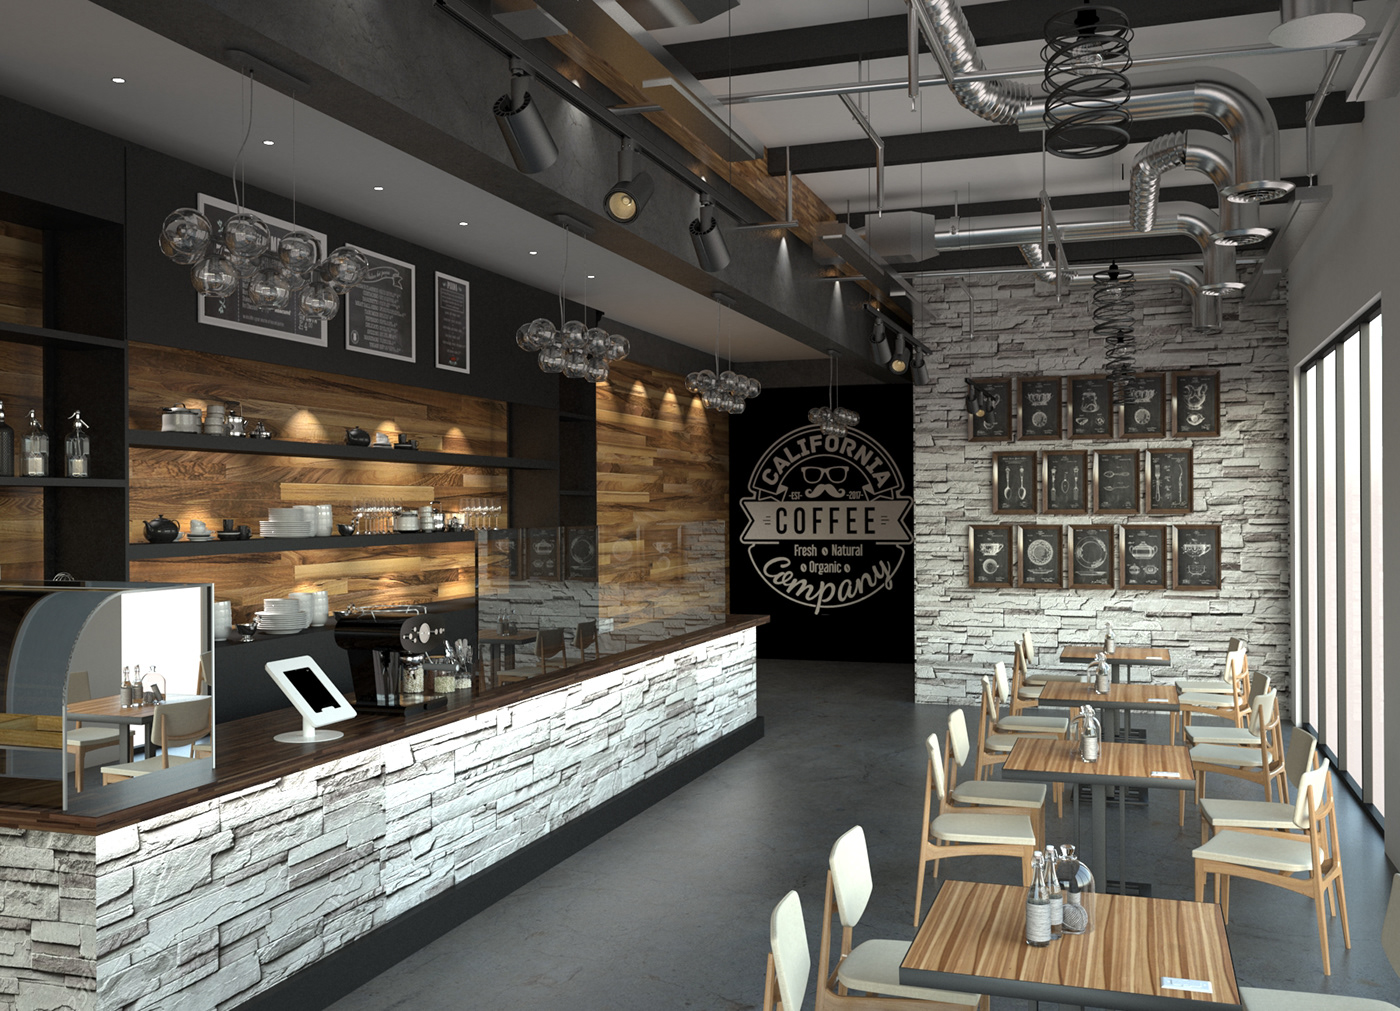 California coffee shop interior design on Behance